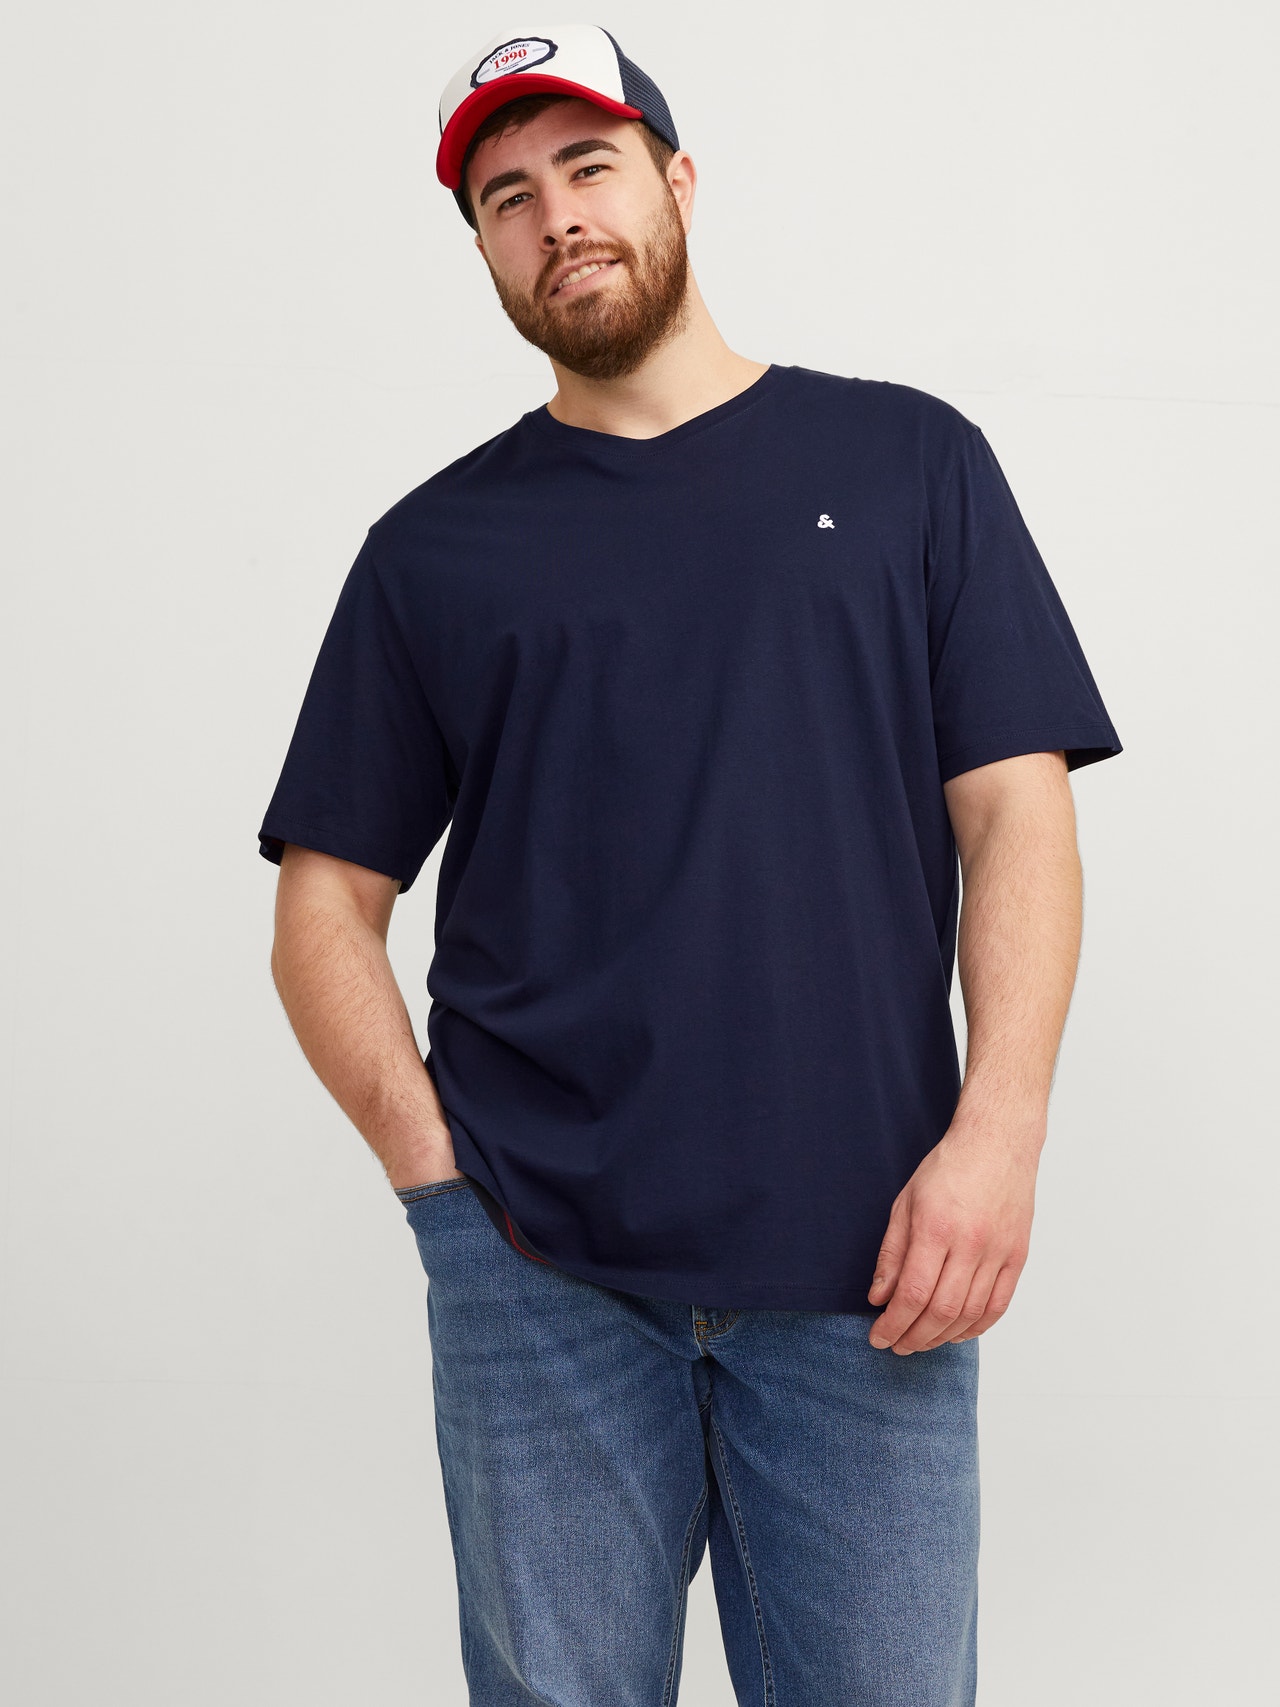 Jack & Jones Plus Size T-shirt Uni -Navy Blazer - 12253778